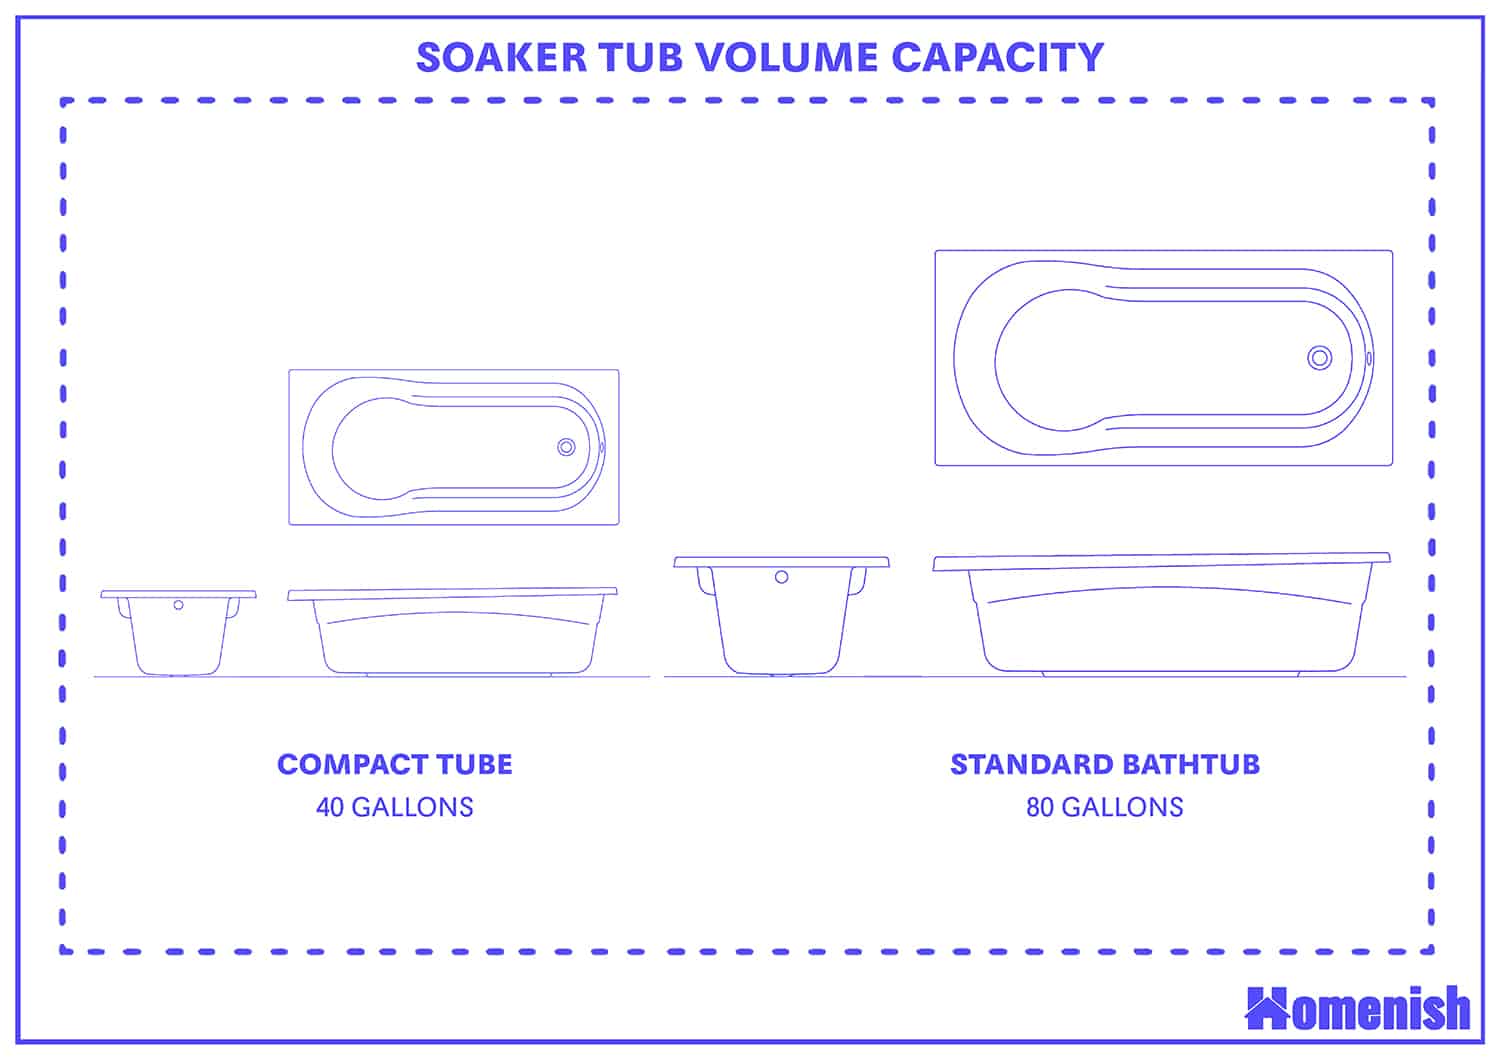 Soaker Tub Volume Capacity